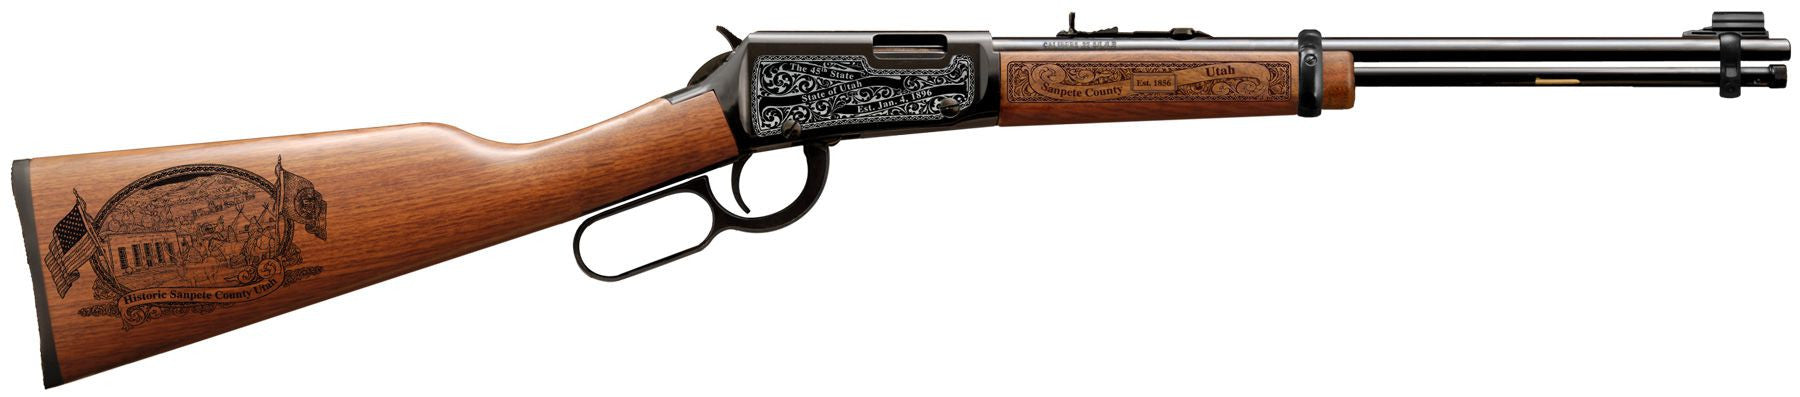 sanpete county utah engraved rifle h001